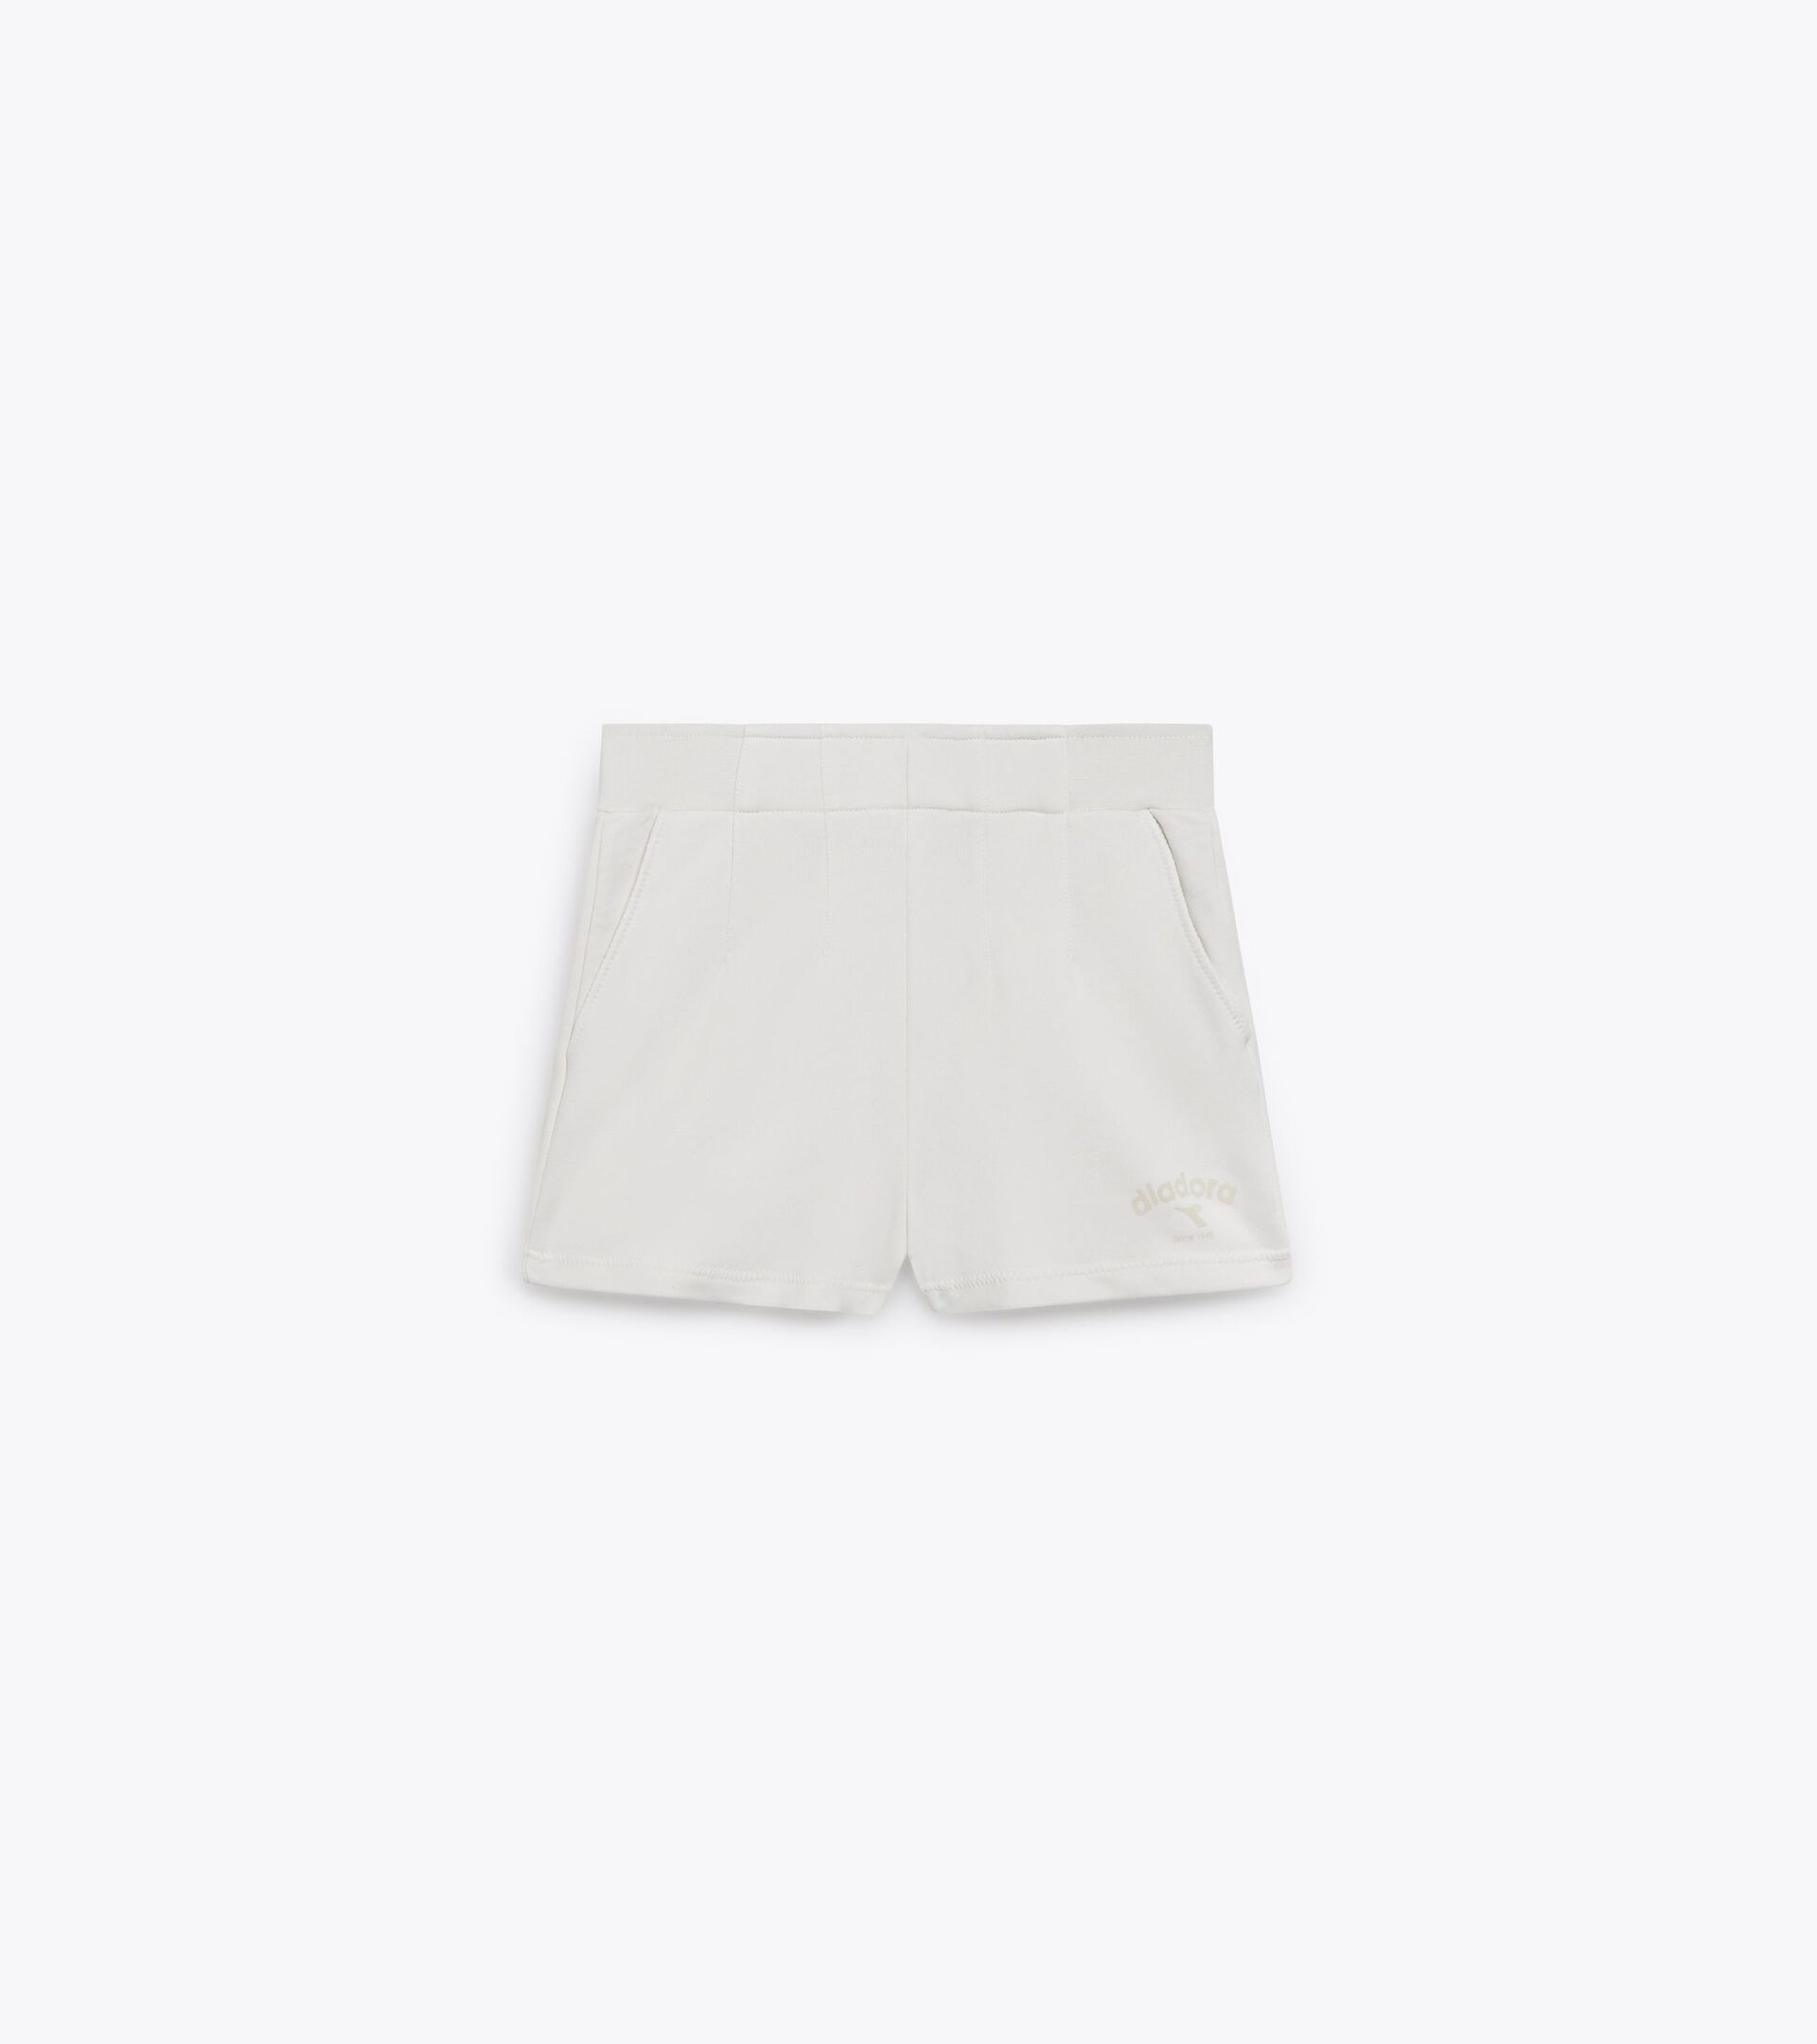 Pantalones cortos - Mujer L. SHORTS ATHL. LOGO BLANCA LECHE - Diadora